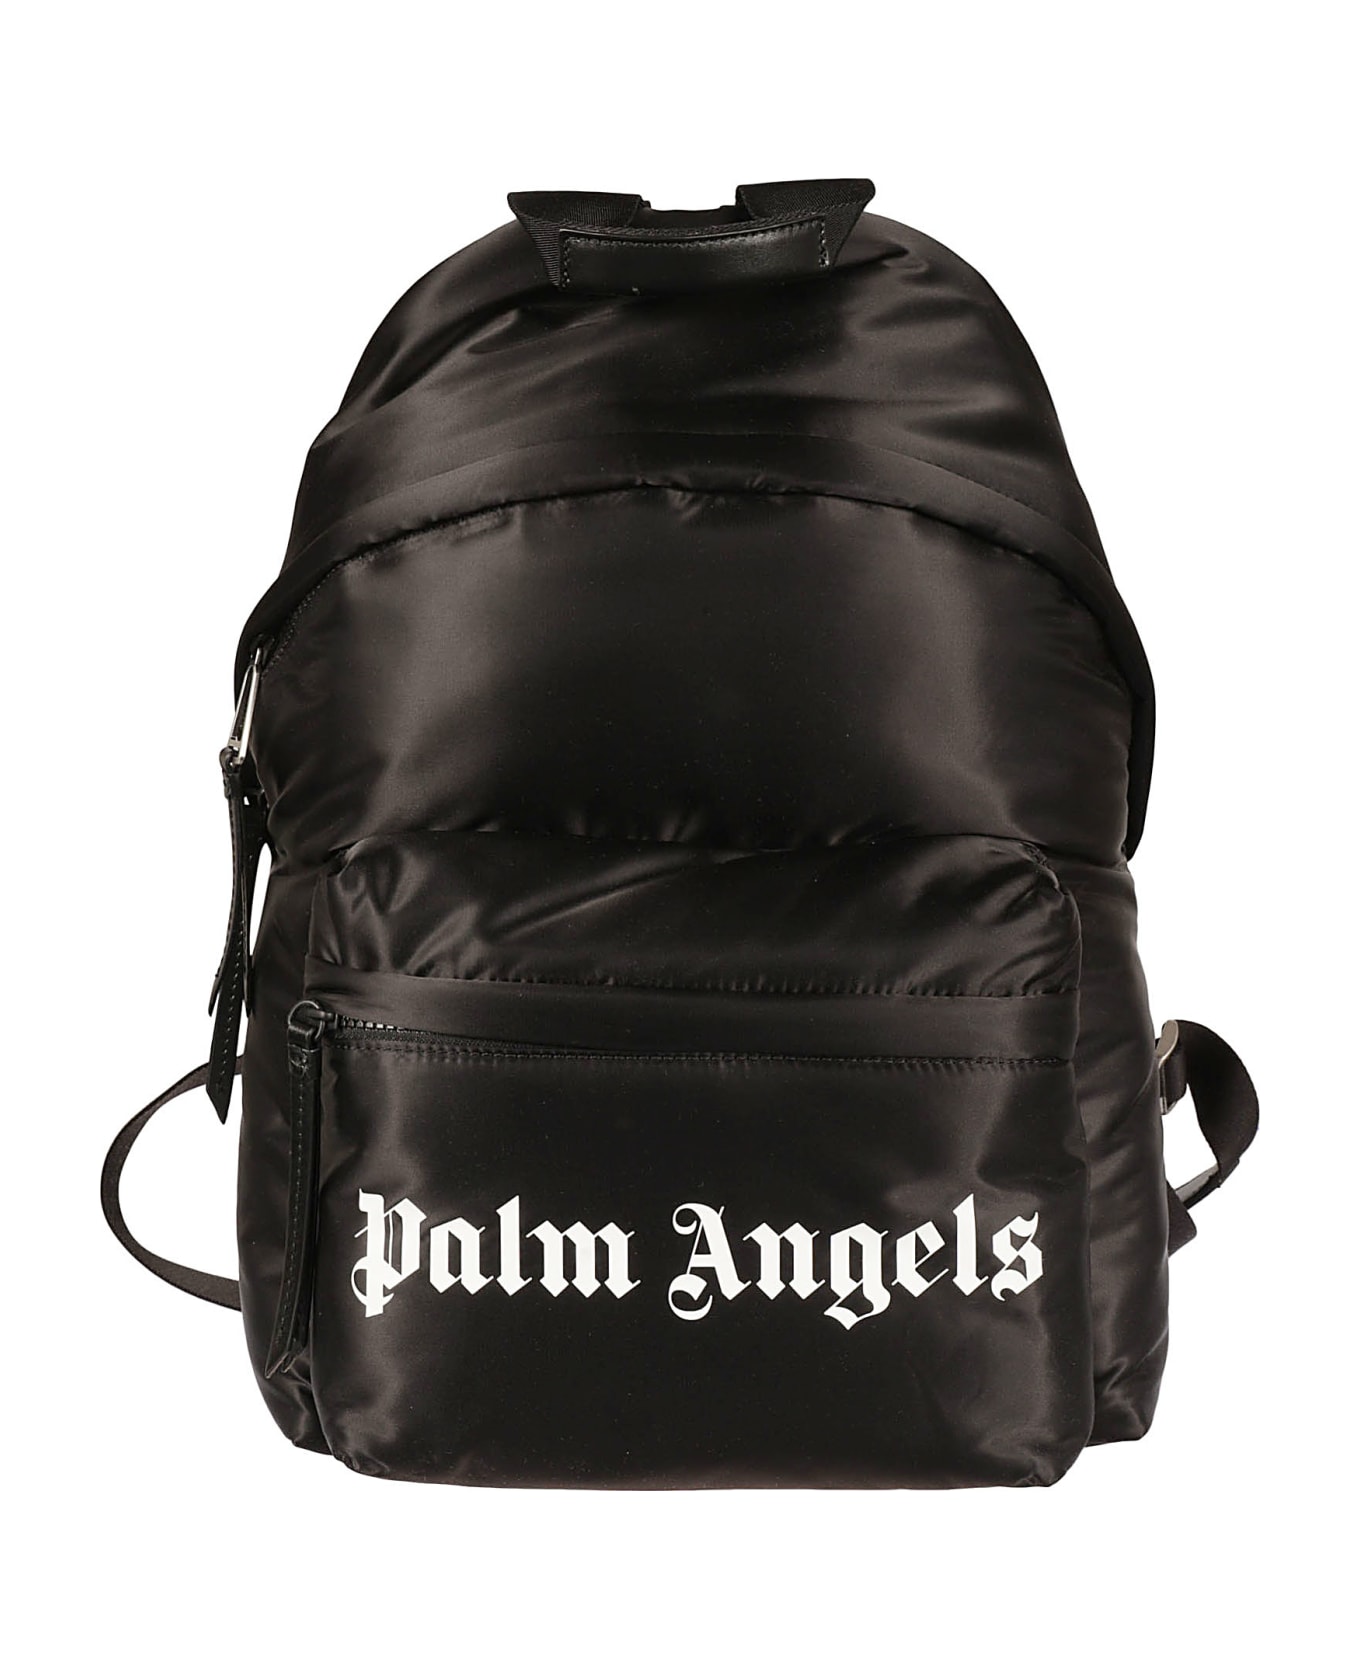 Palm Angels Logo Print Nylon Backpack - Nero/bianco